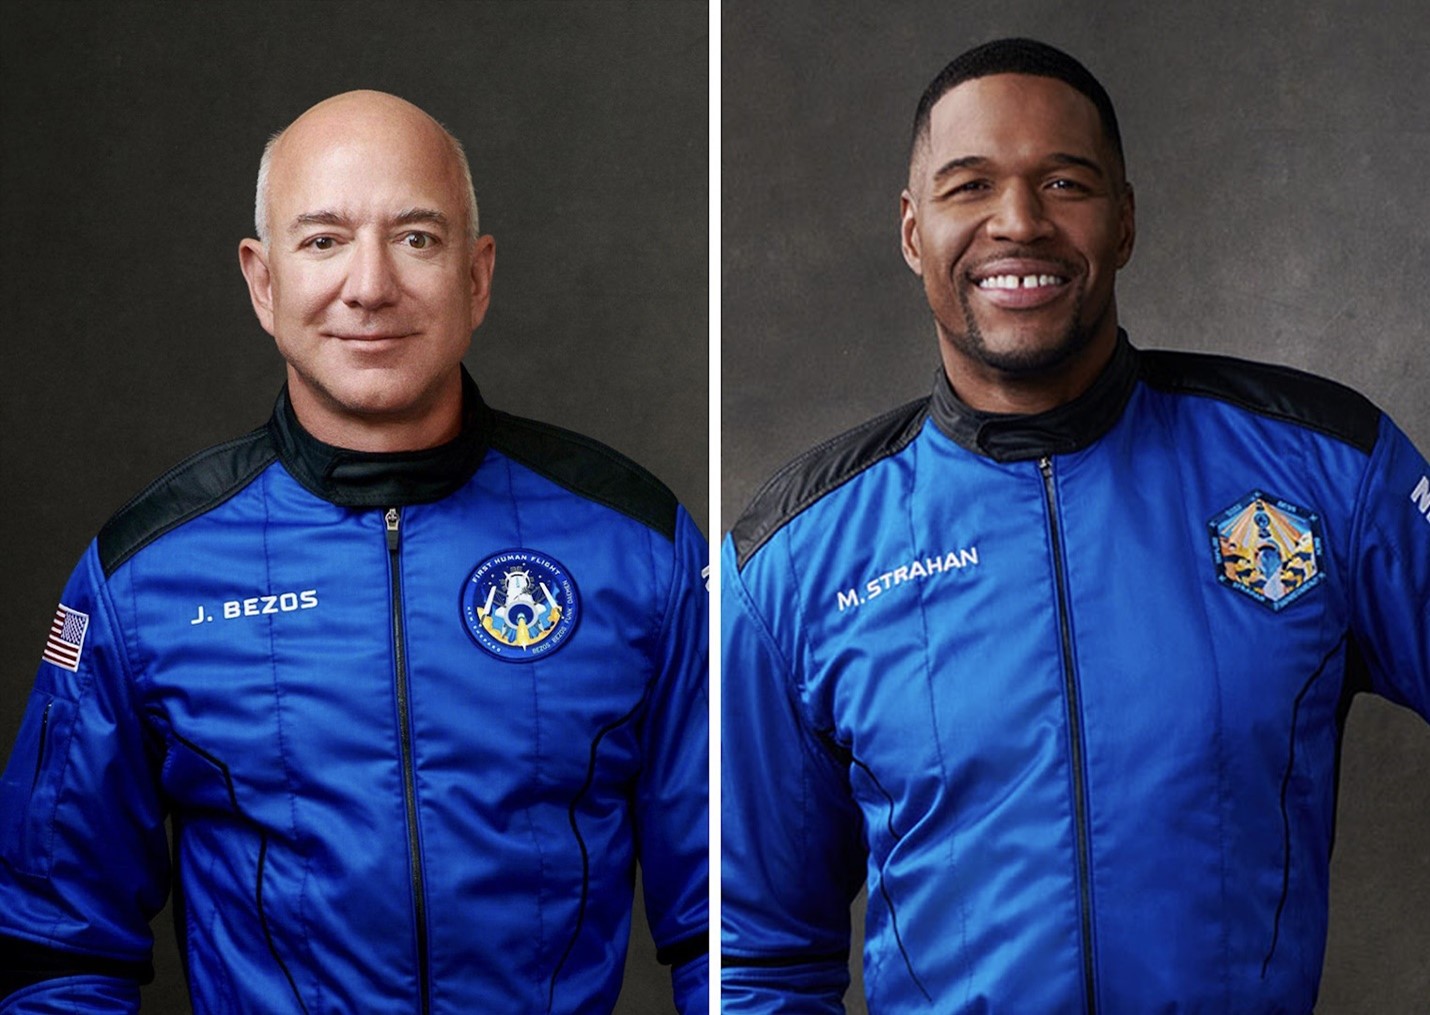 New Shephard Astronauts – Jeff Bezos and Michael Strahan